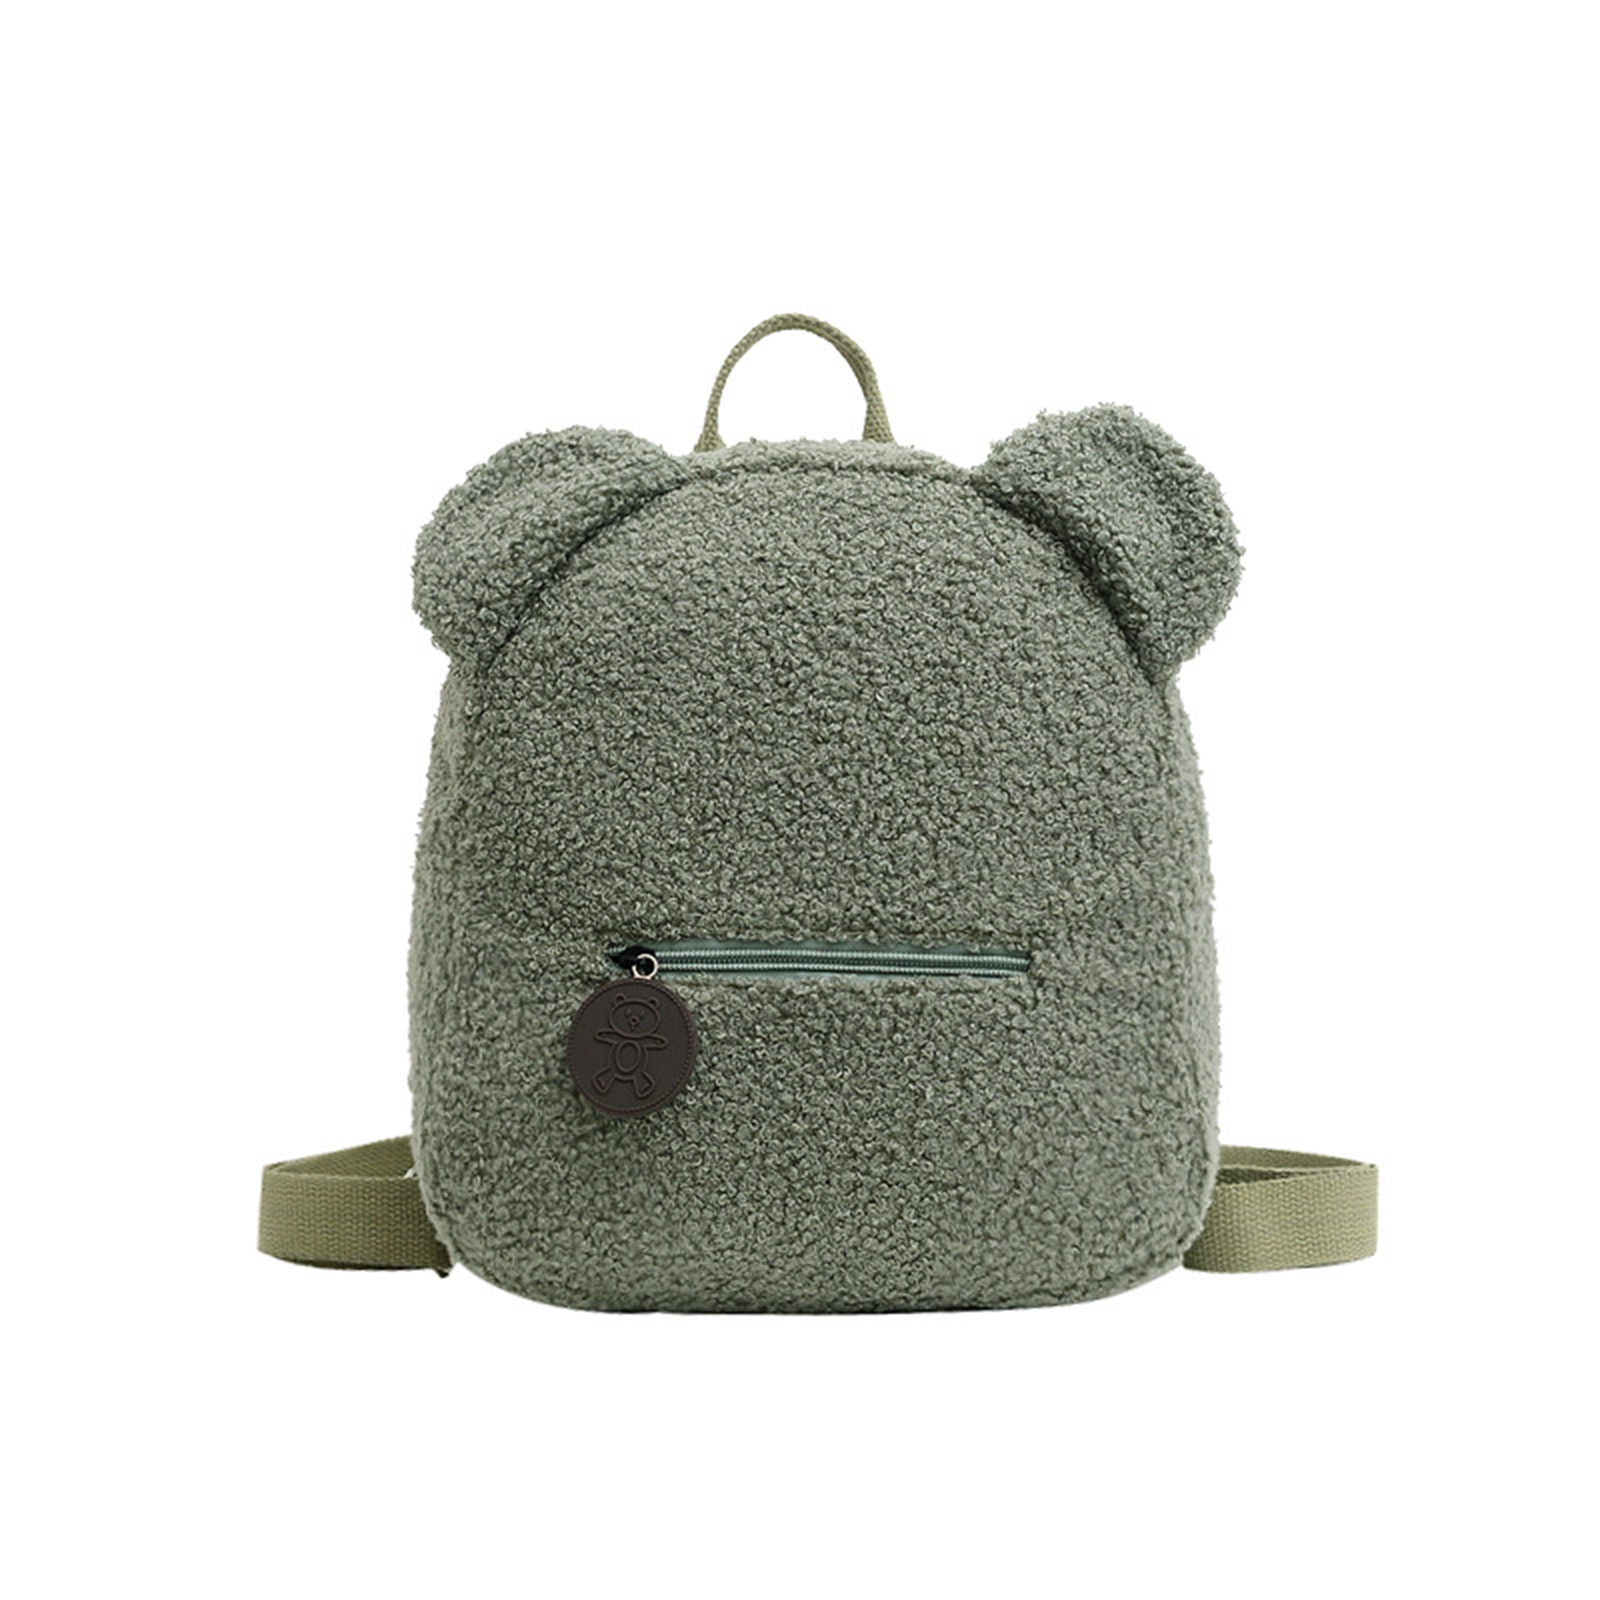 Multitrust Women Girls Cute Bear Ear Fleece Solid Color Small Backpack Daypack - image 1 of 4